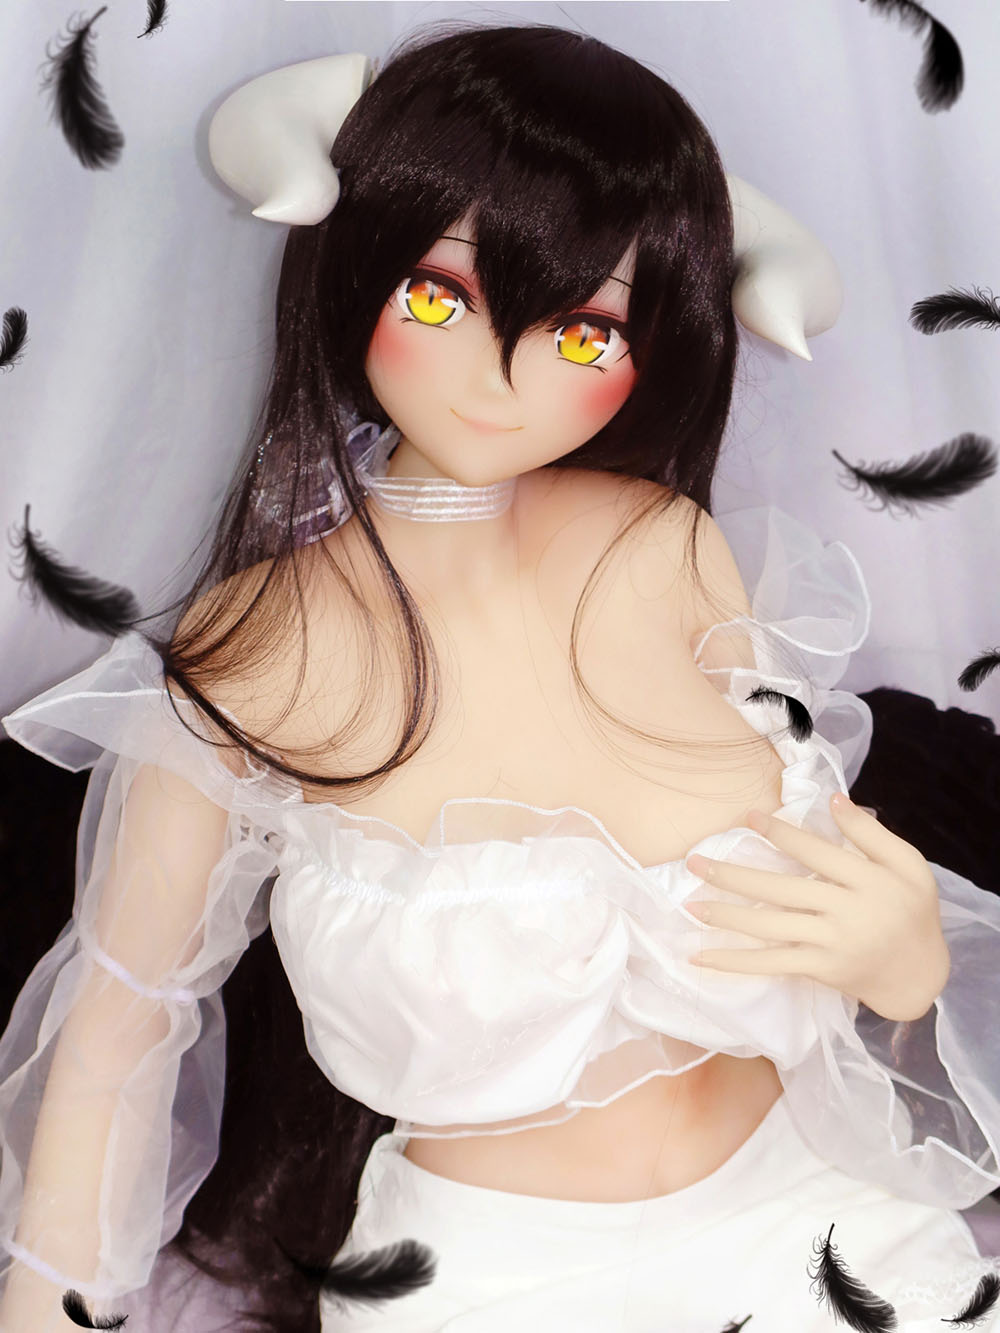 albedo overlord cosplay sex doll